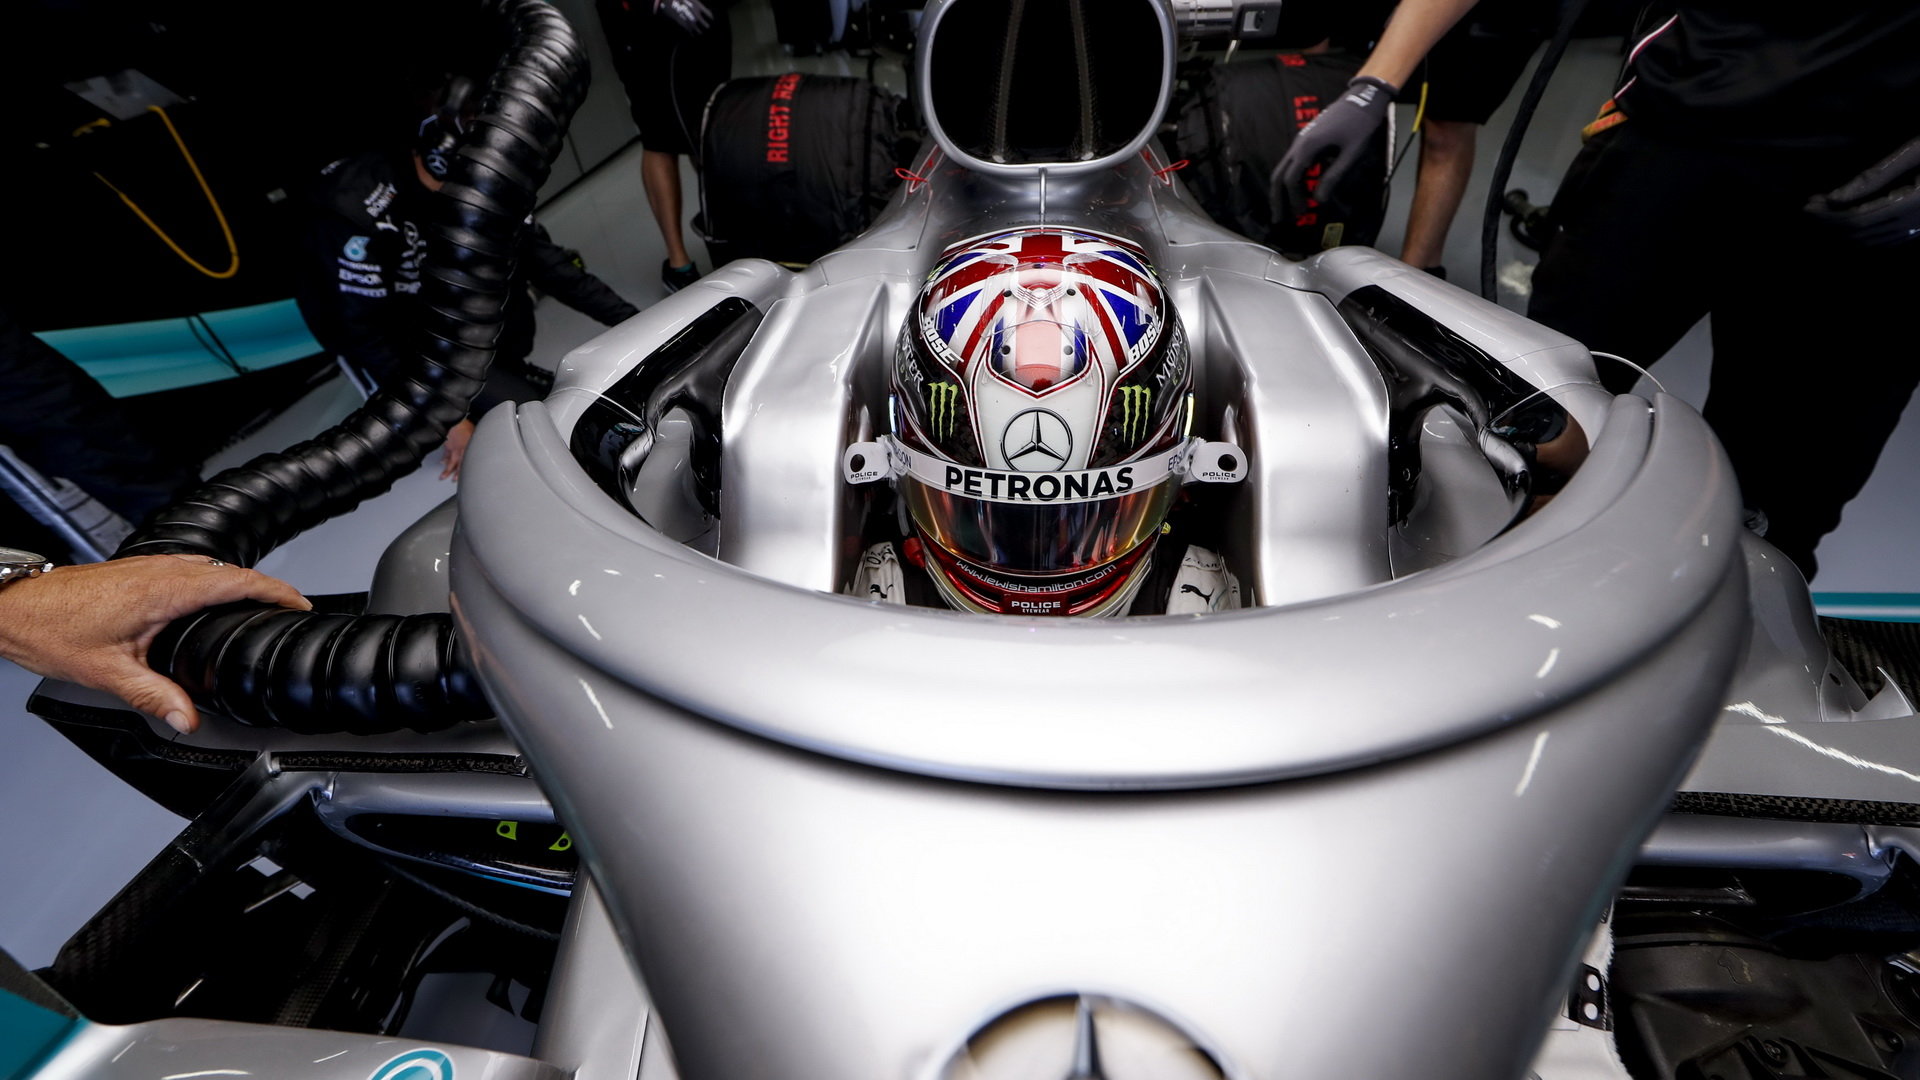 Lewis Hamilton v kvalifikaci v Silverstone